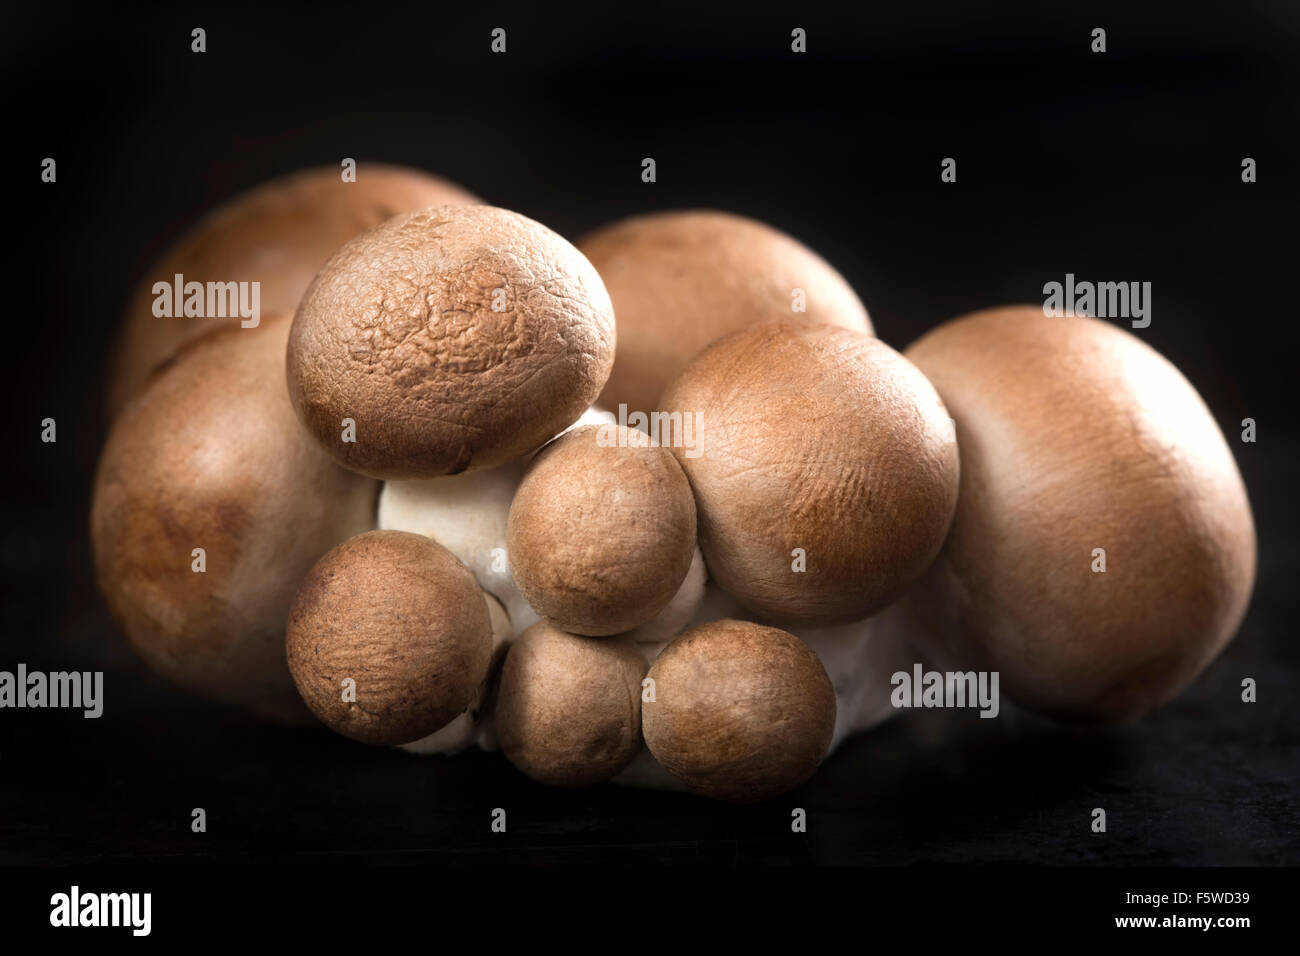 Baby bella mushrooms on a dark background Stock Photo